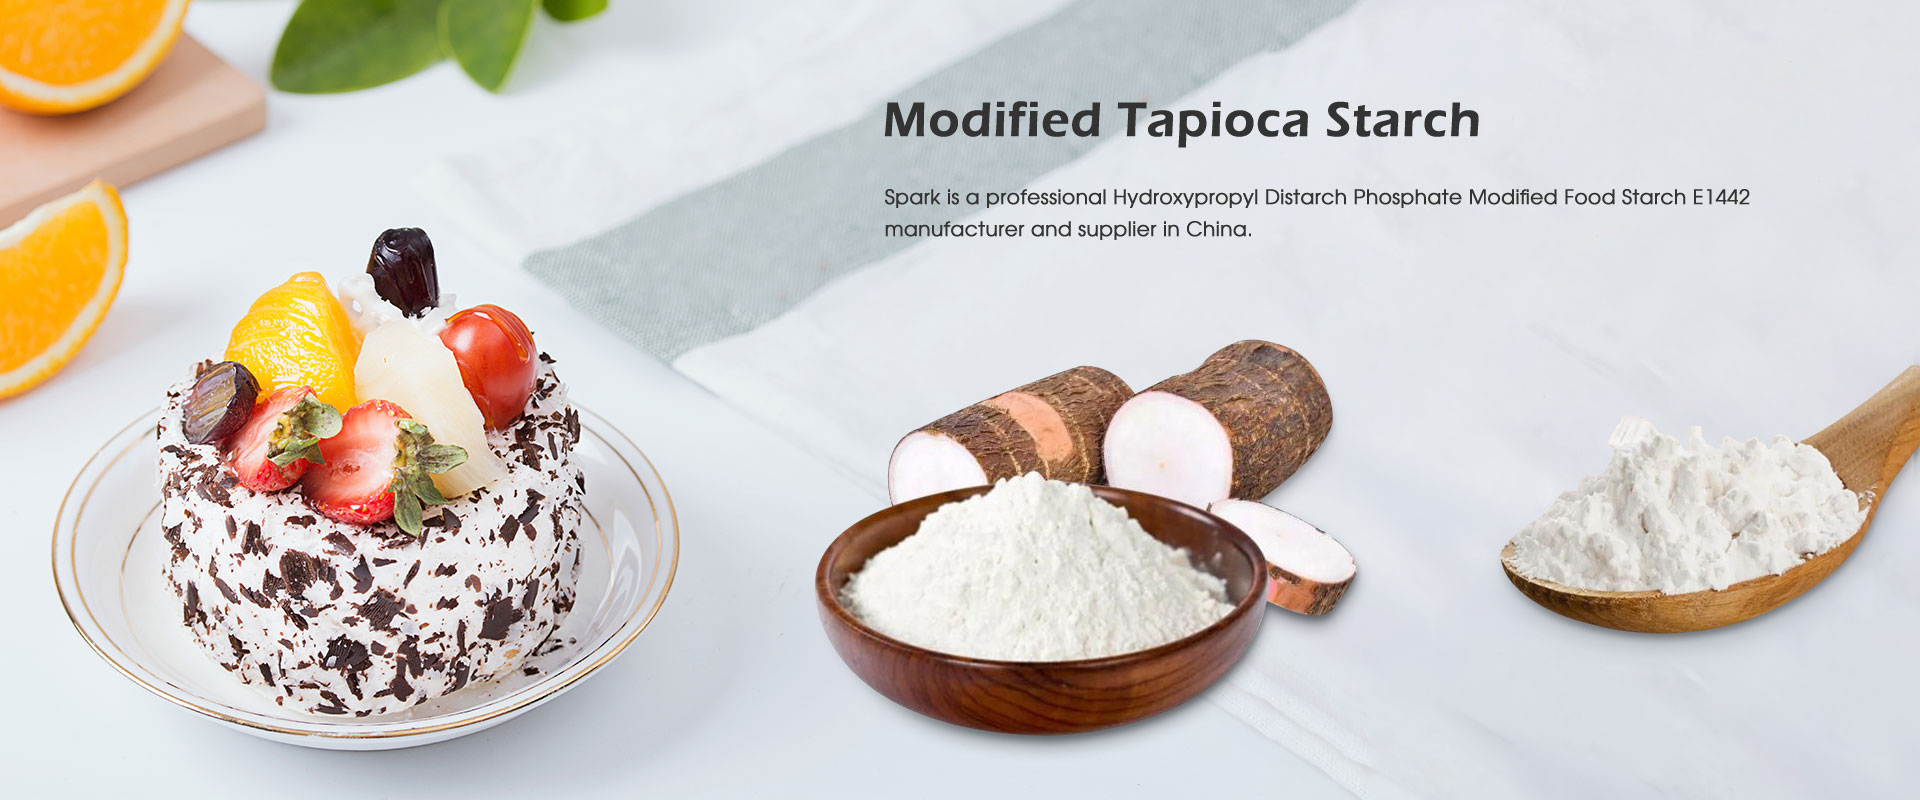 Modified Tapioca Starch Manufacturers